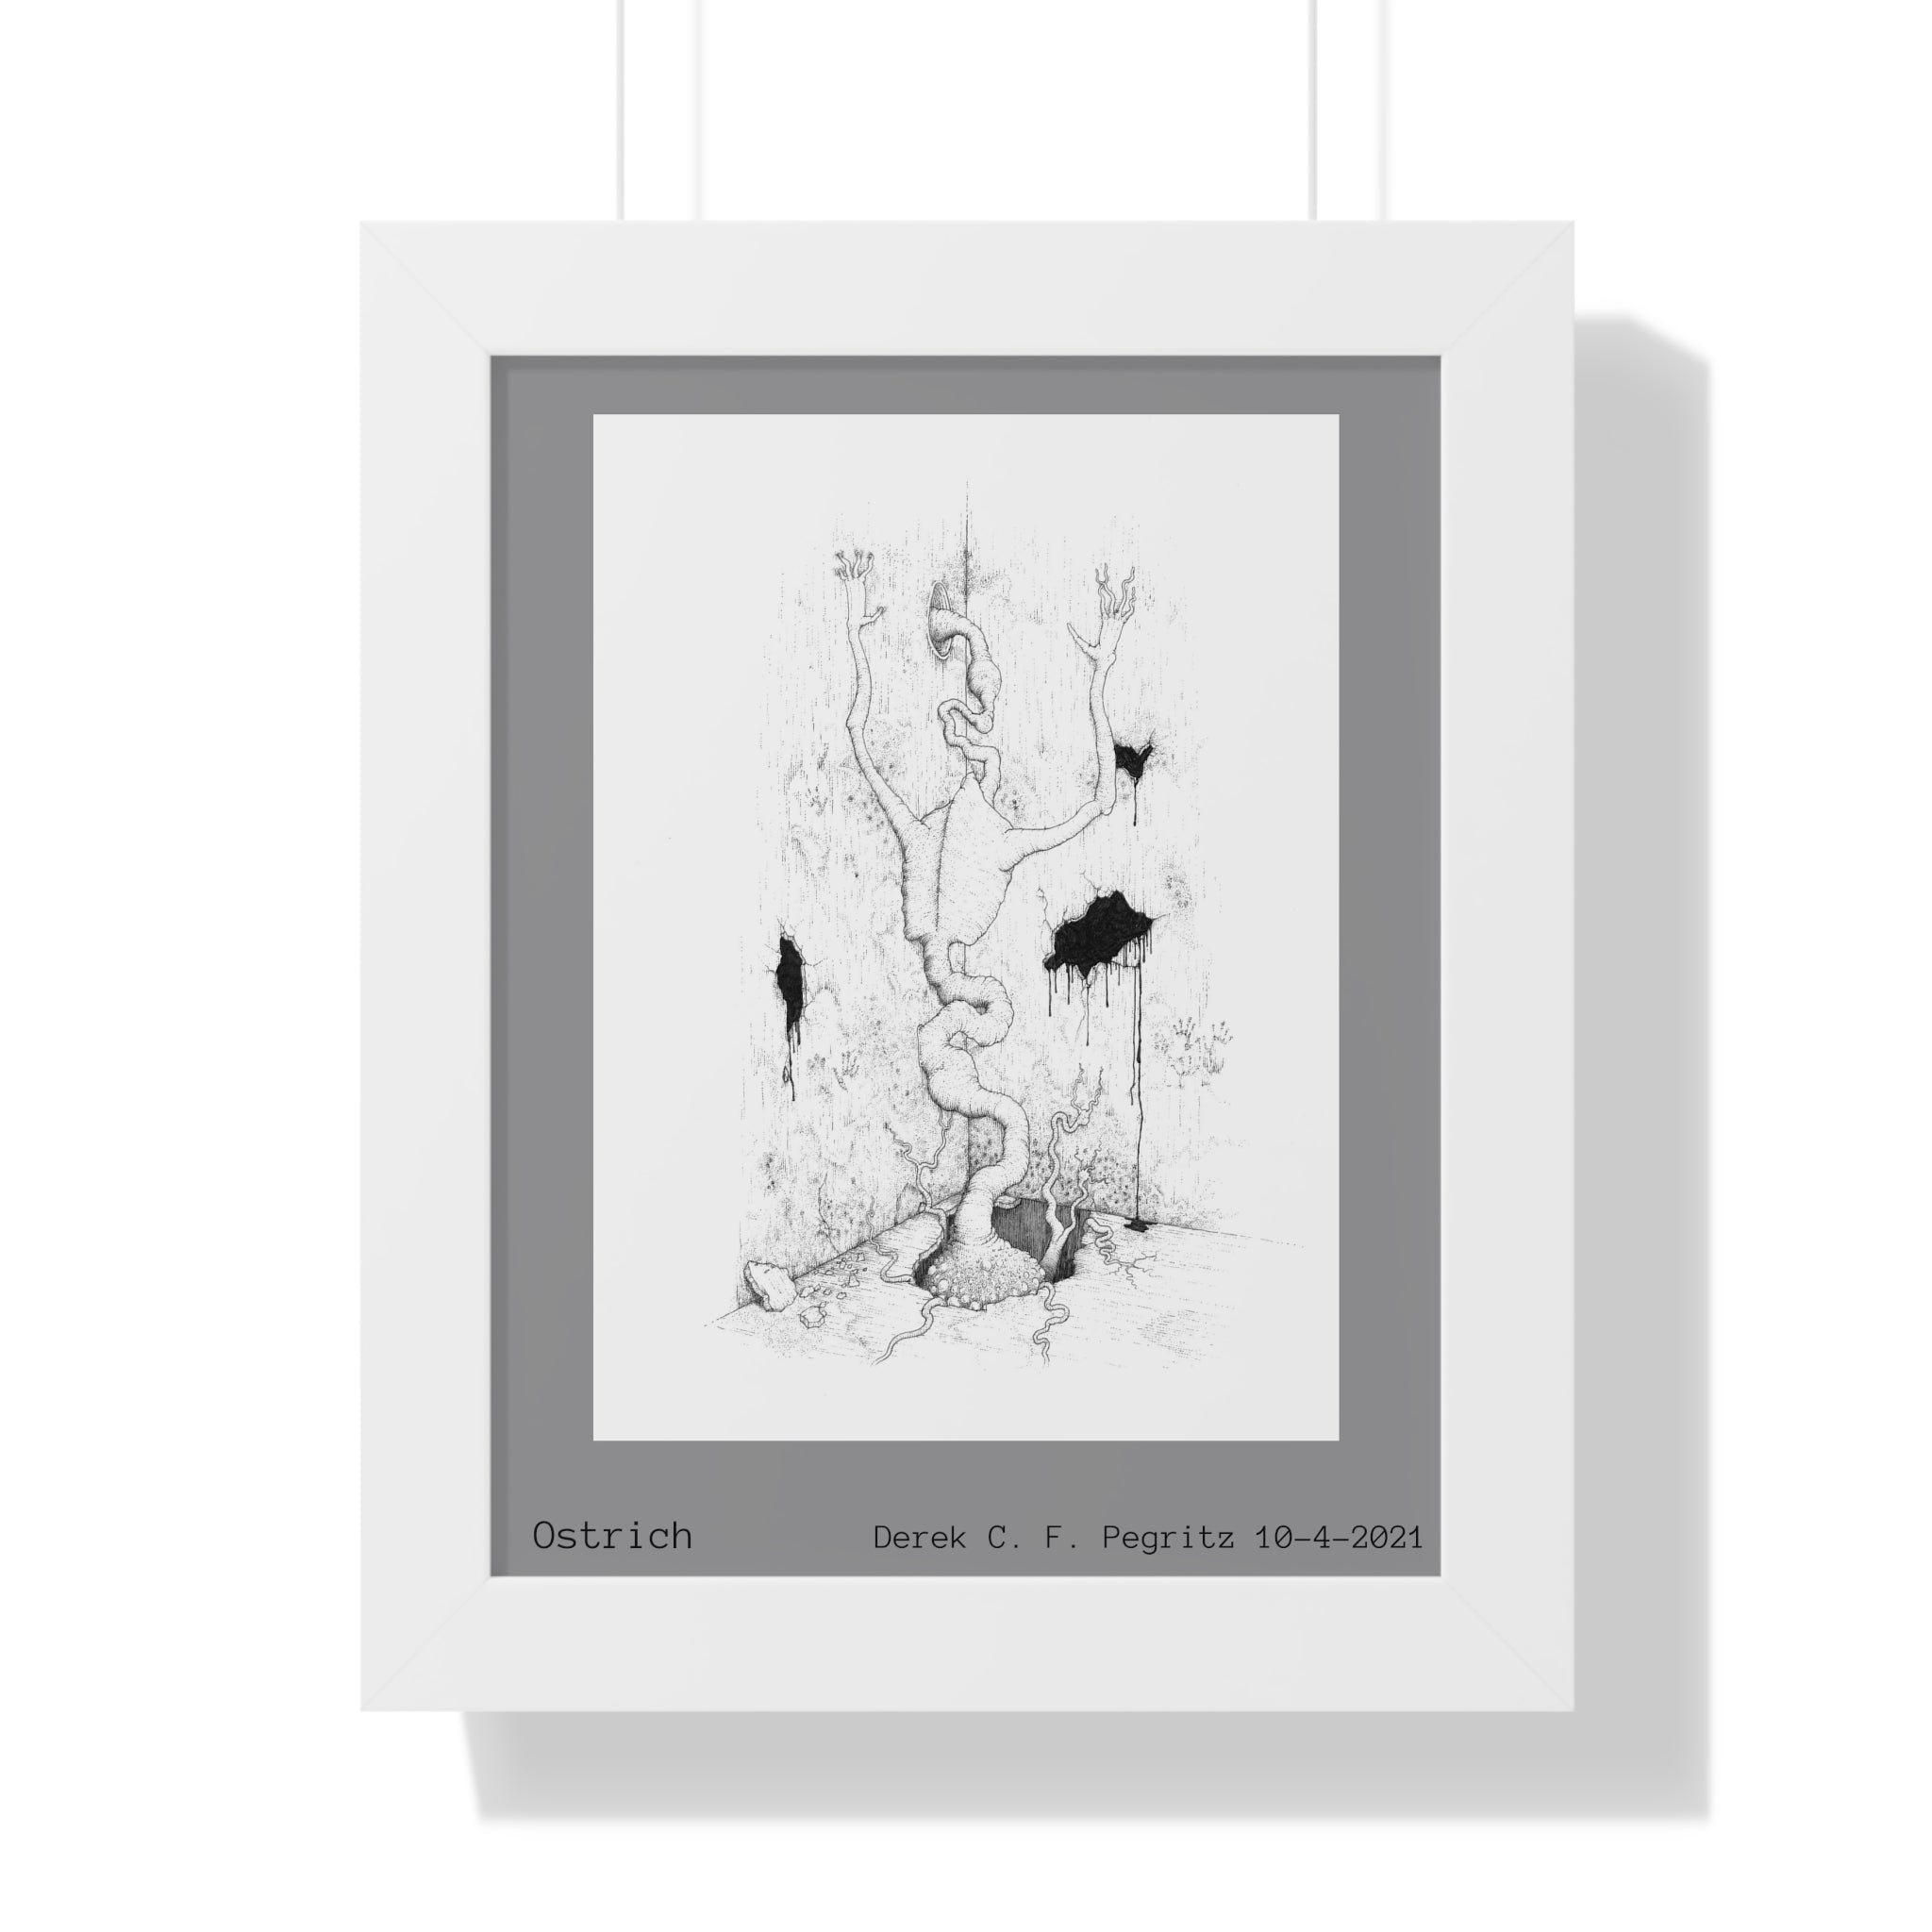 Ostrich - Derek C. F. Pegritz - Framed Vertical Poster